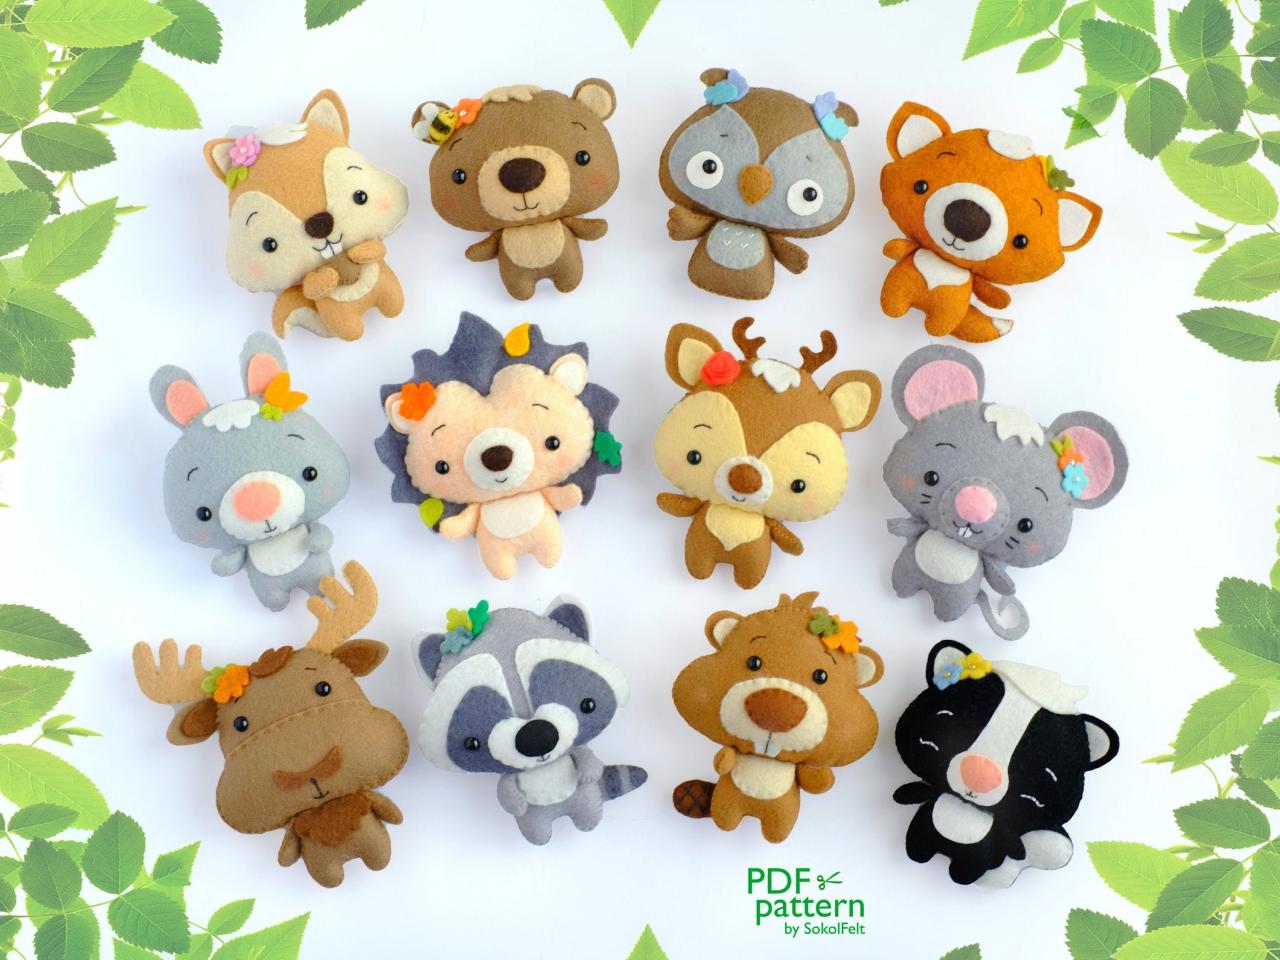 Set Of 12 Cute Woodland Animal Felt Toy Sewing Pdf And Svg Patterns, Squirrel, Raccoon, Fox, Skunk, Bear, Hedgehog, Deer, Rabbit, Beaver